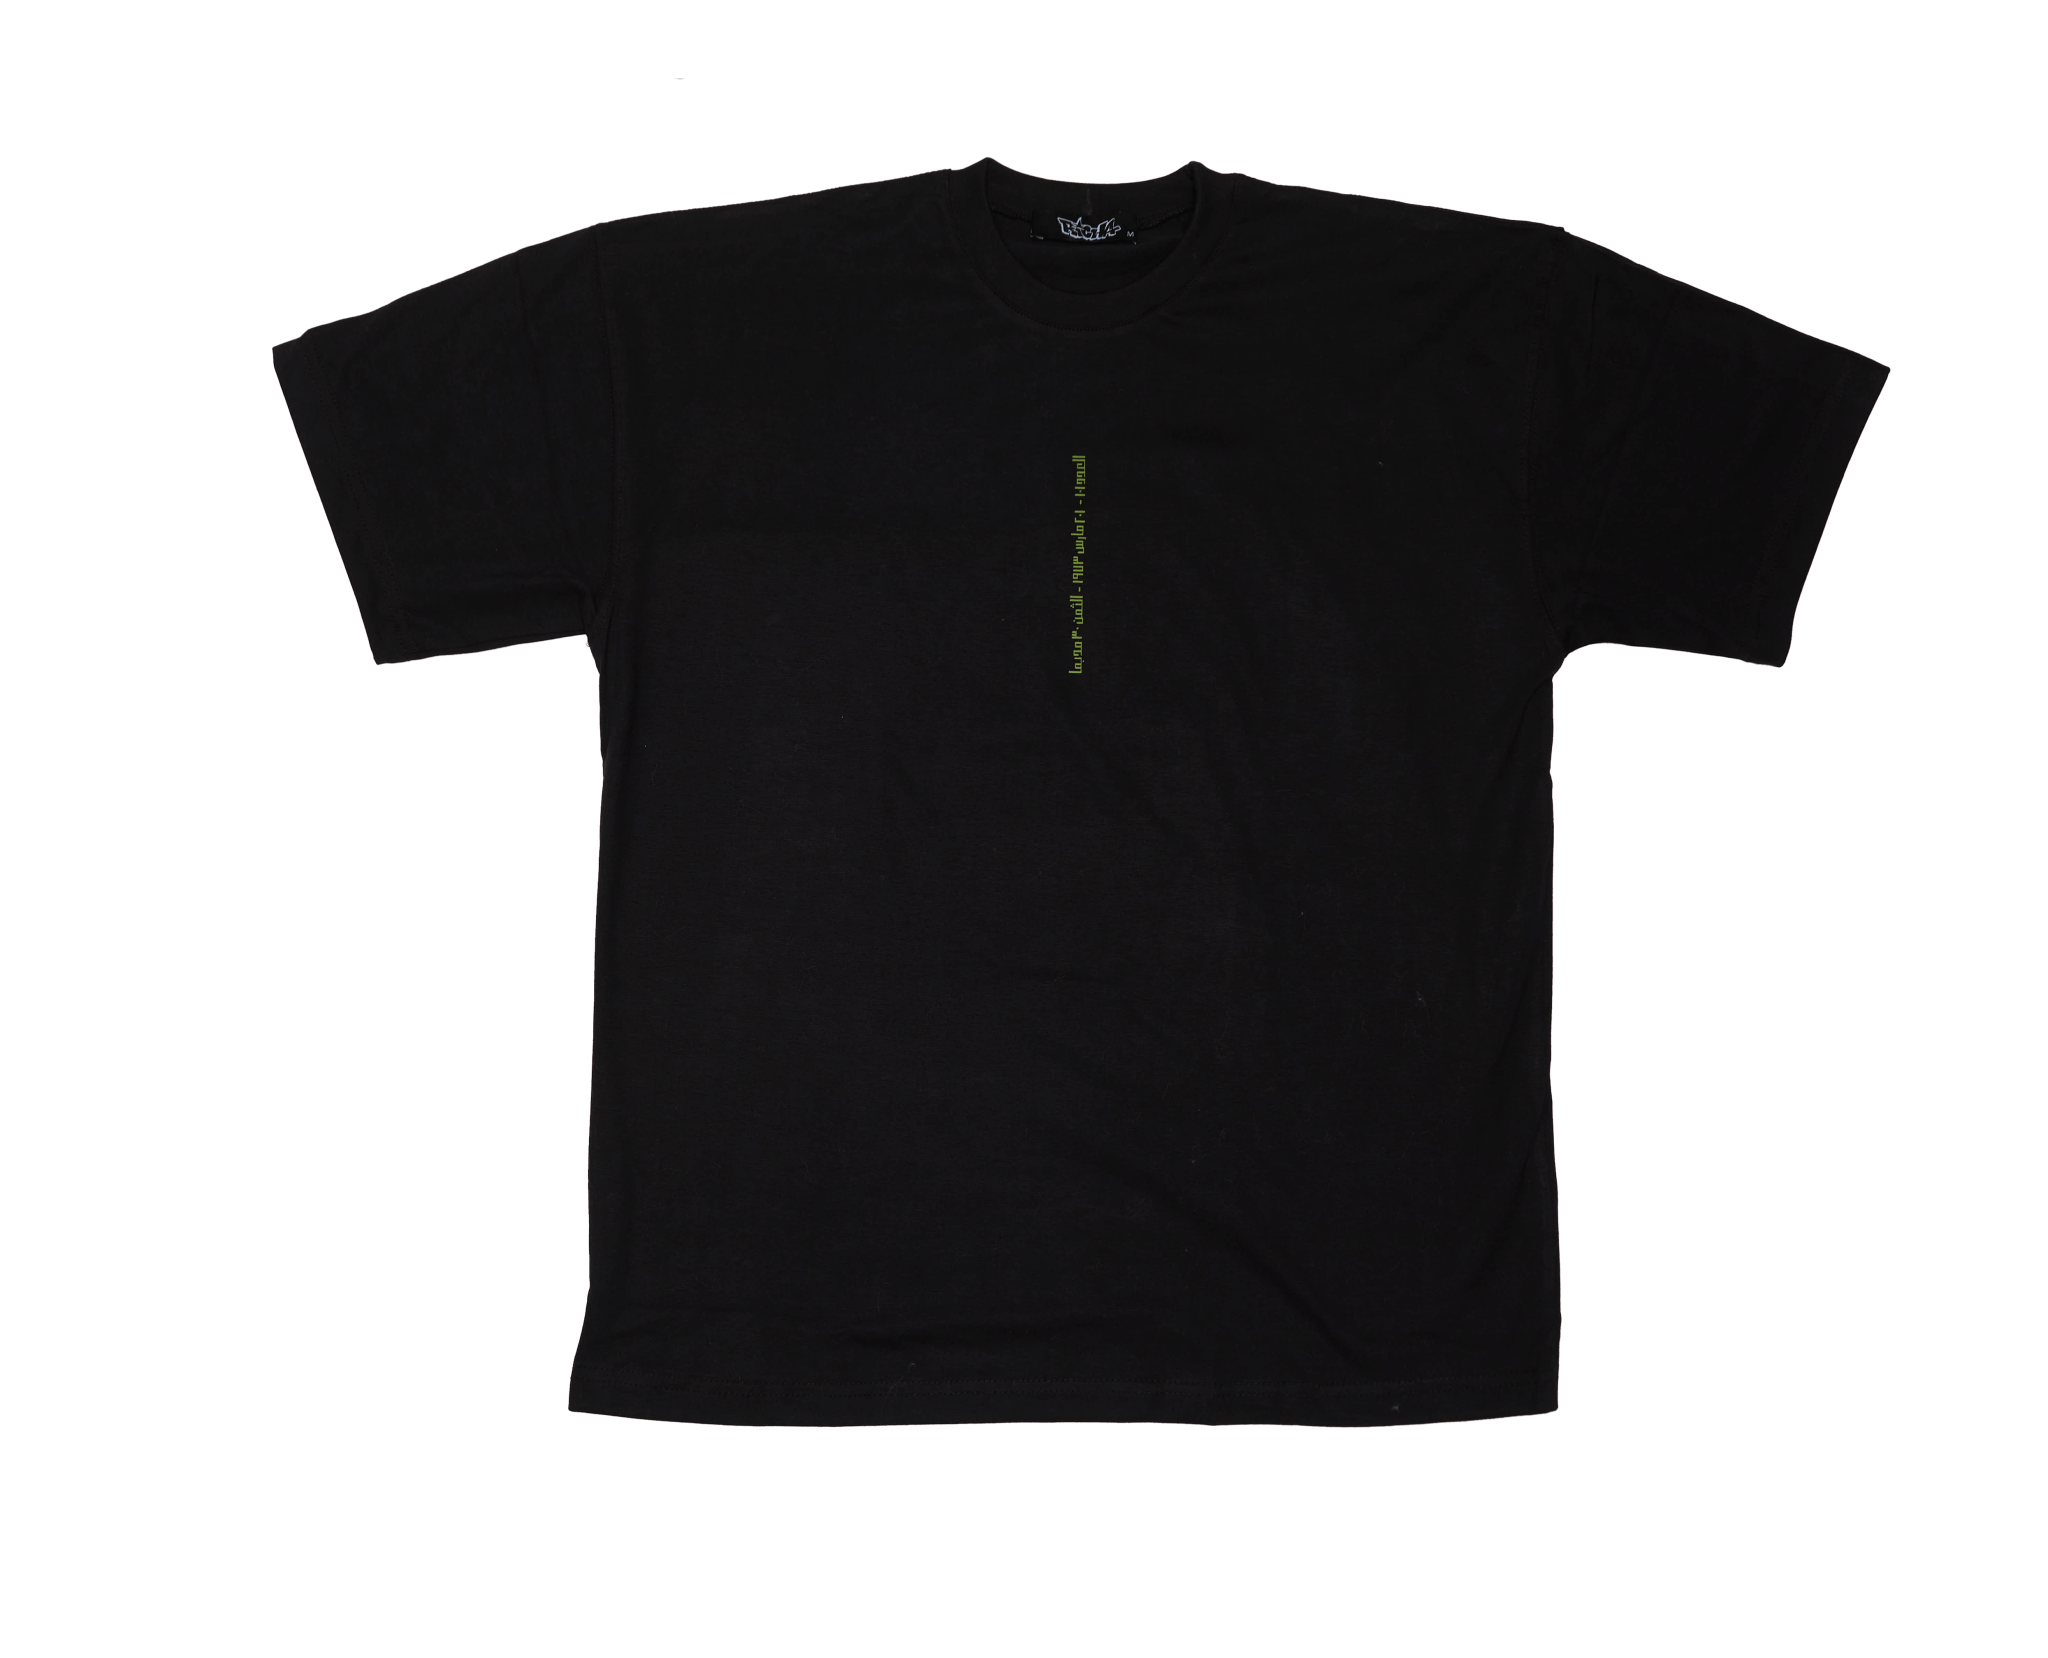 SMDMag1-1 Black T-shirt